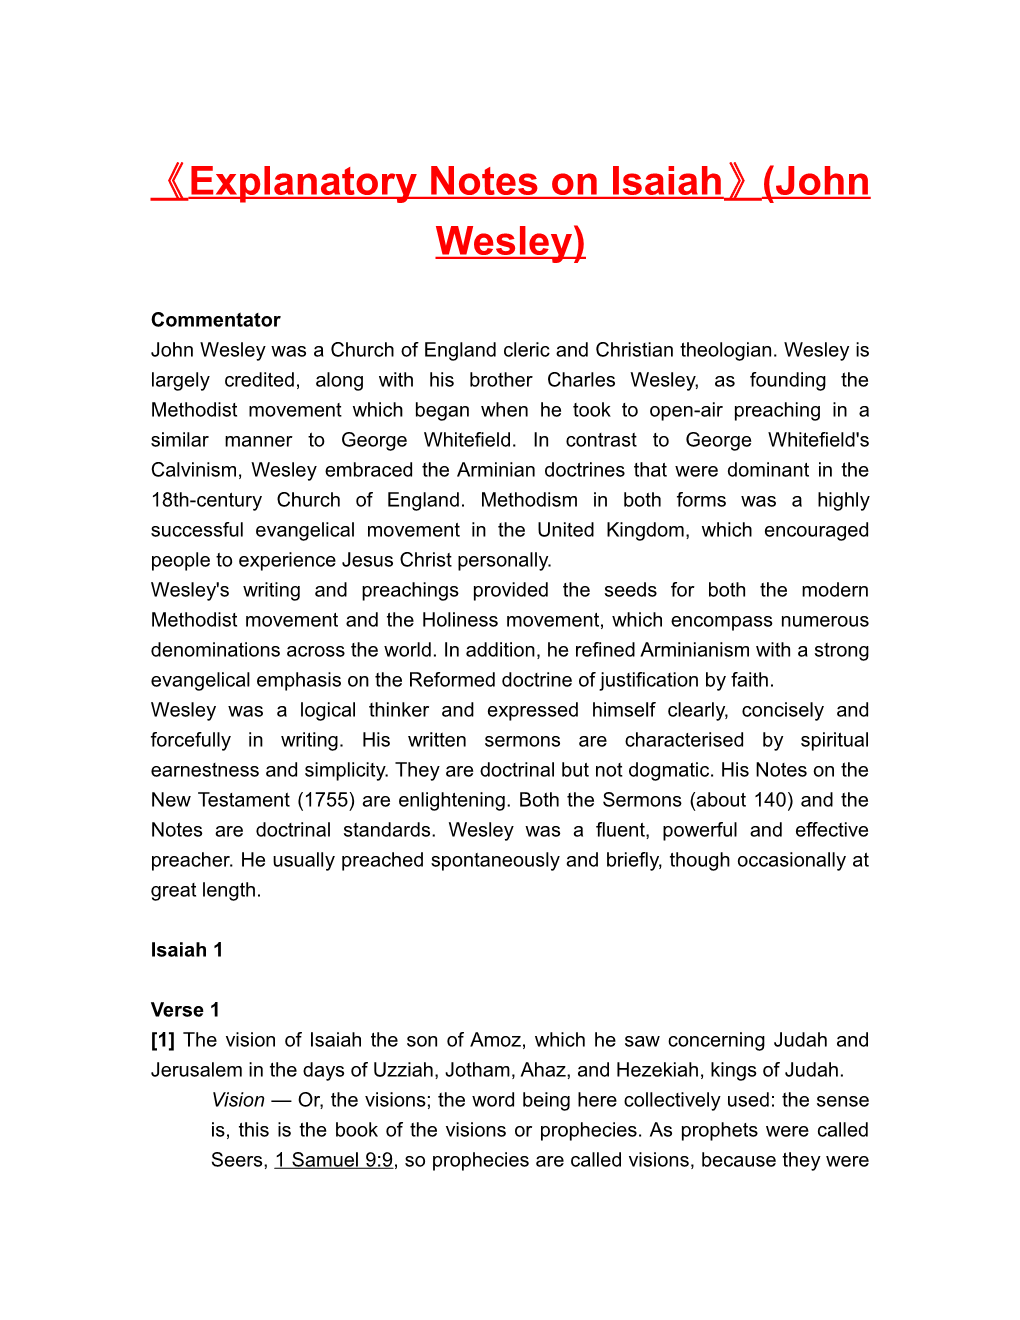 Explanatory Notes on Isaiah (John Wesley)